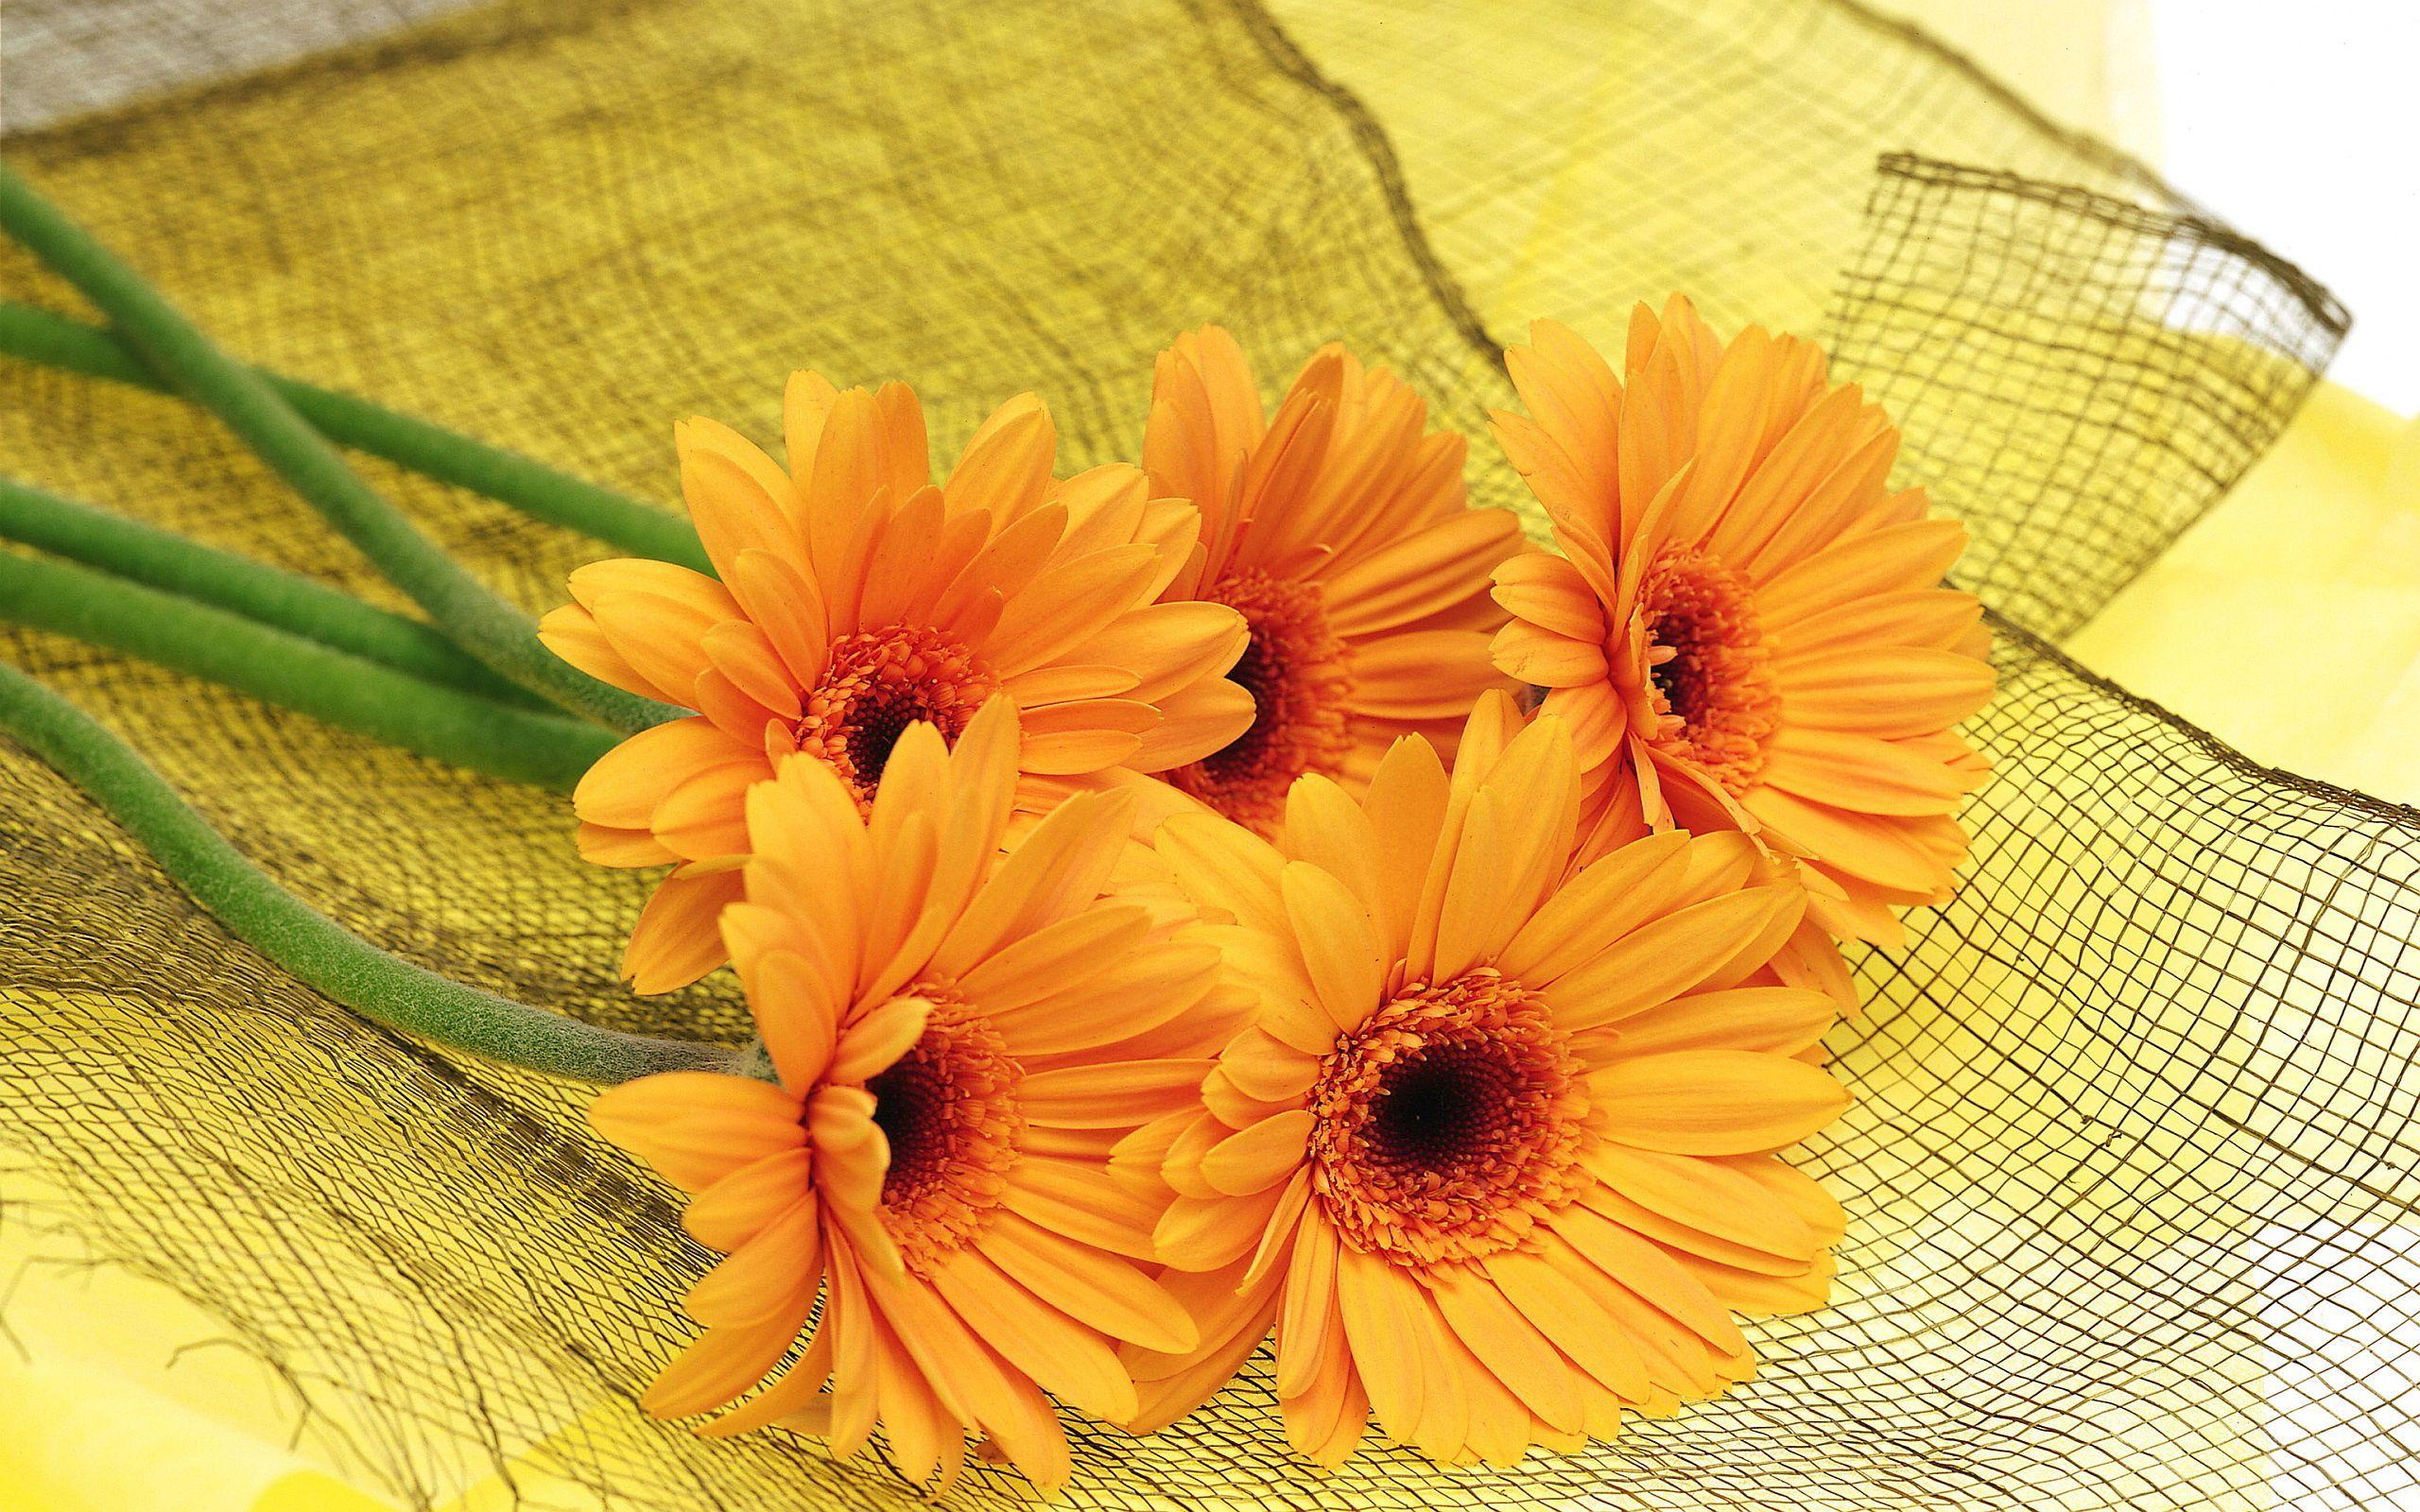 orange. Orange Flowers Wallpaper Picture Photo Image. ::::MY